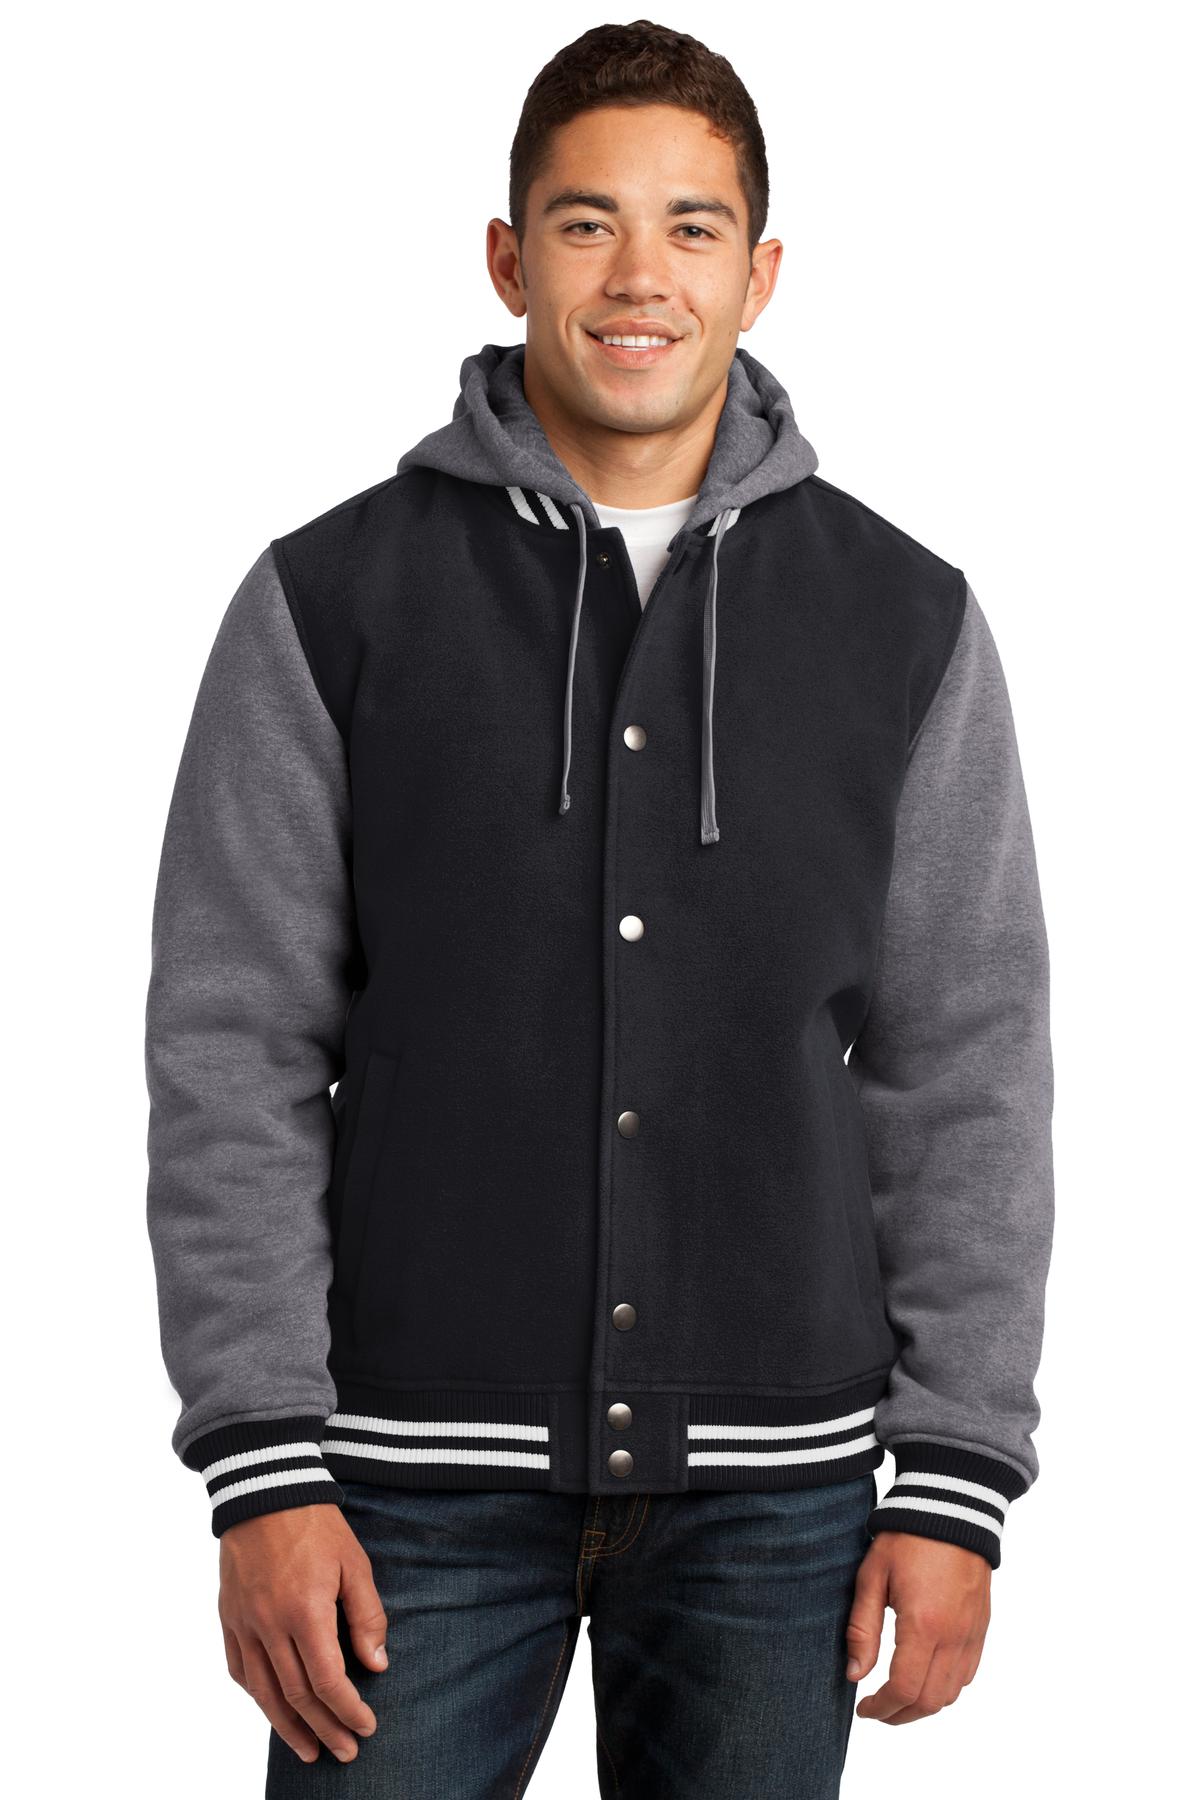 Sport-Tek Hospitality Outerwear ® Insulated Letterman Jacket.-Sport-Tek